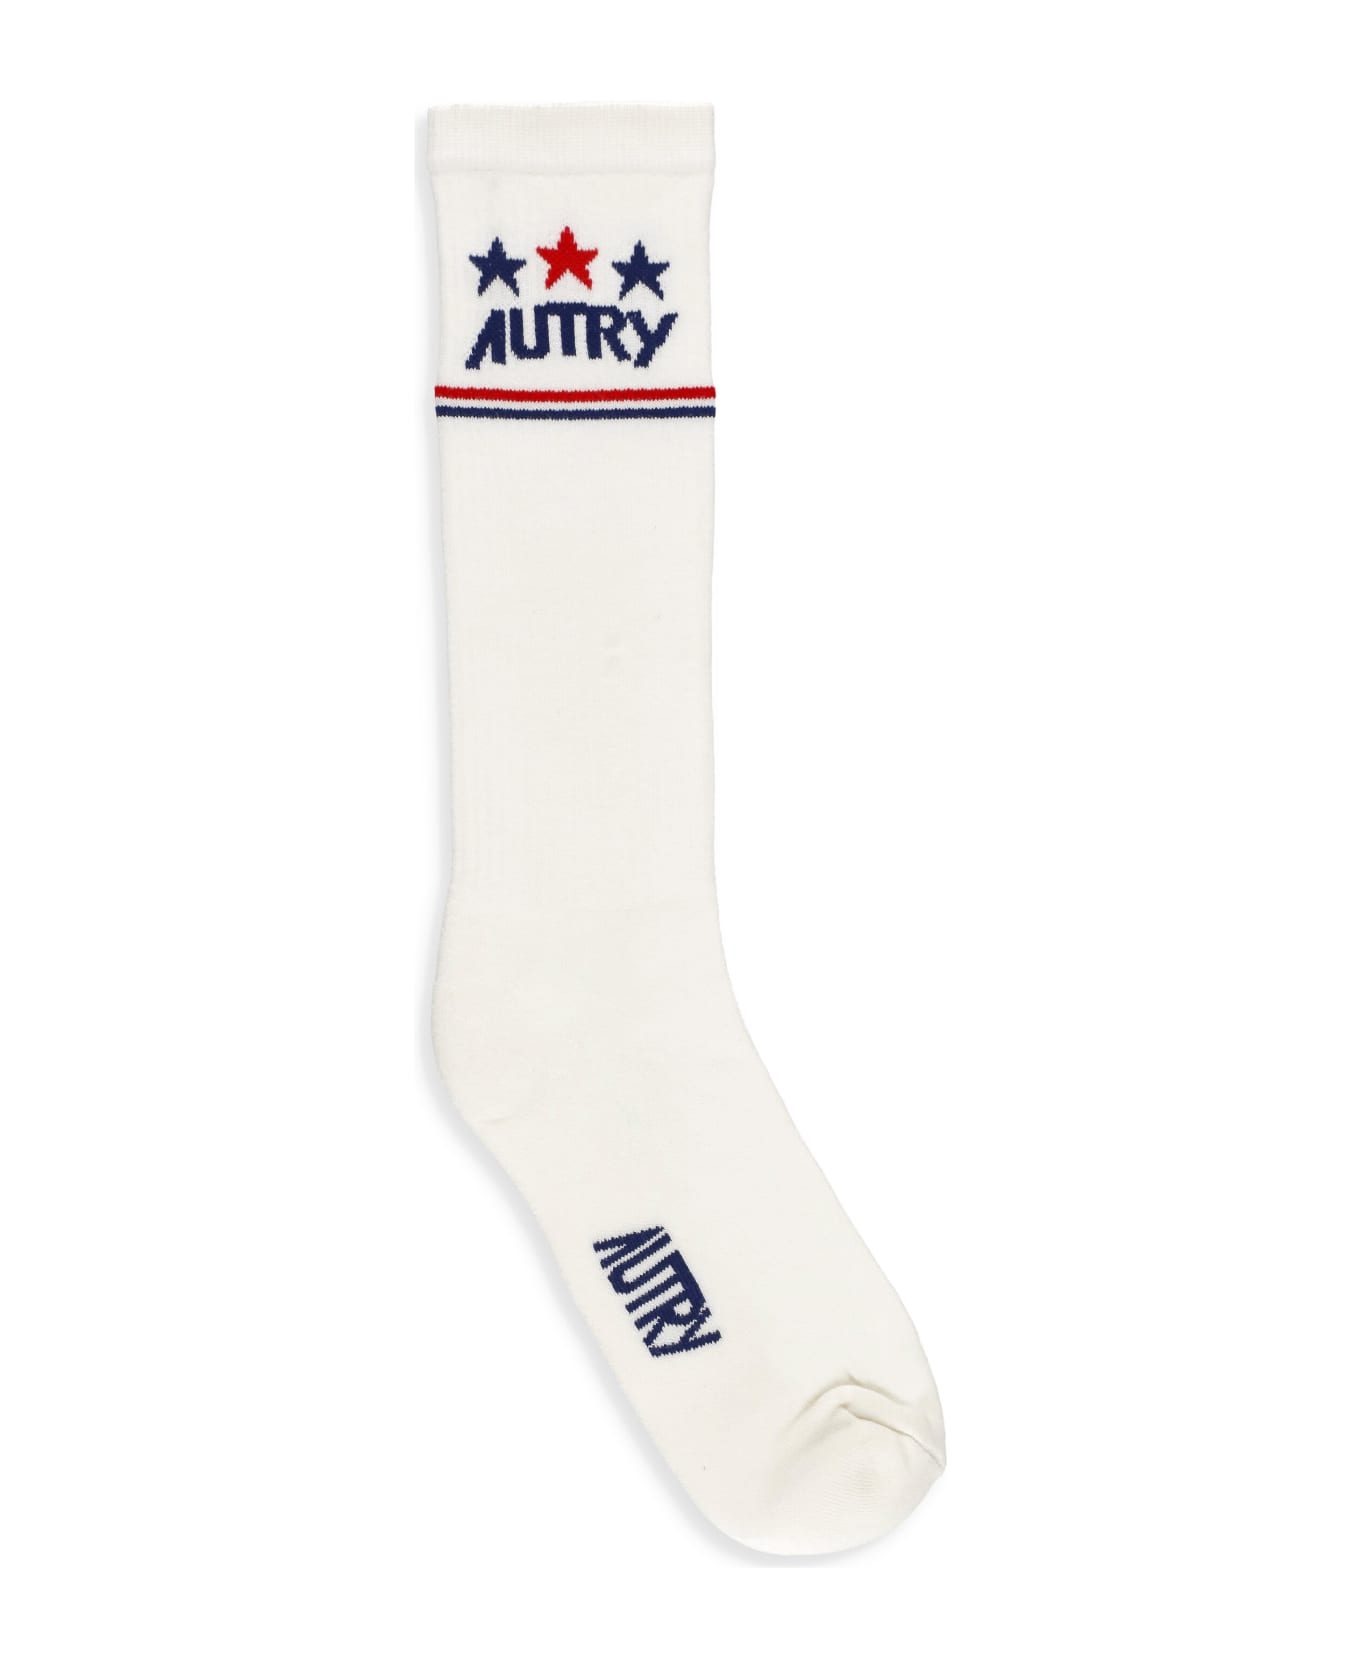 Autry Cotton Socks - Wht/star